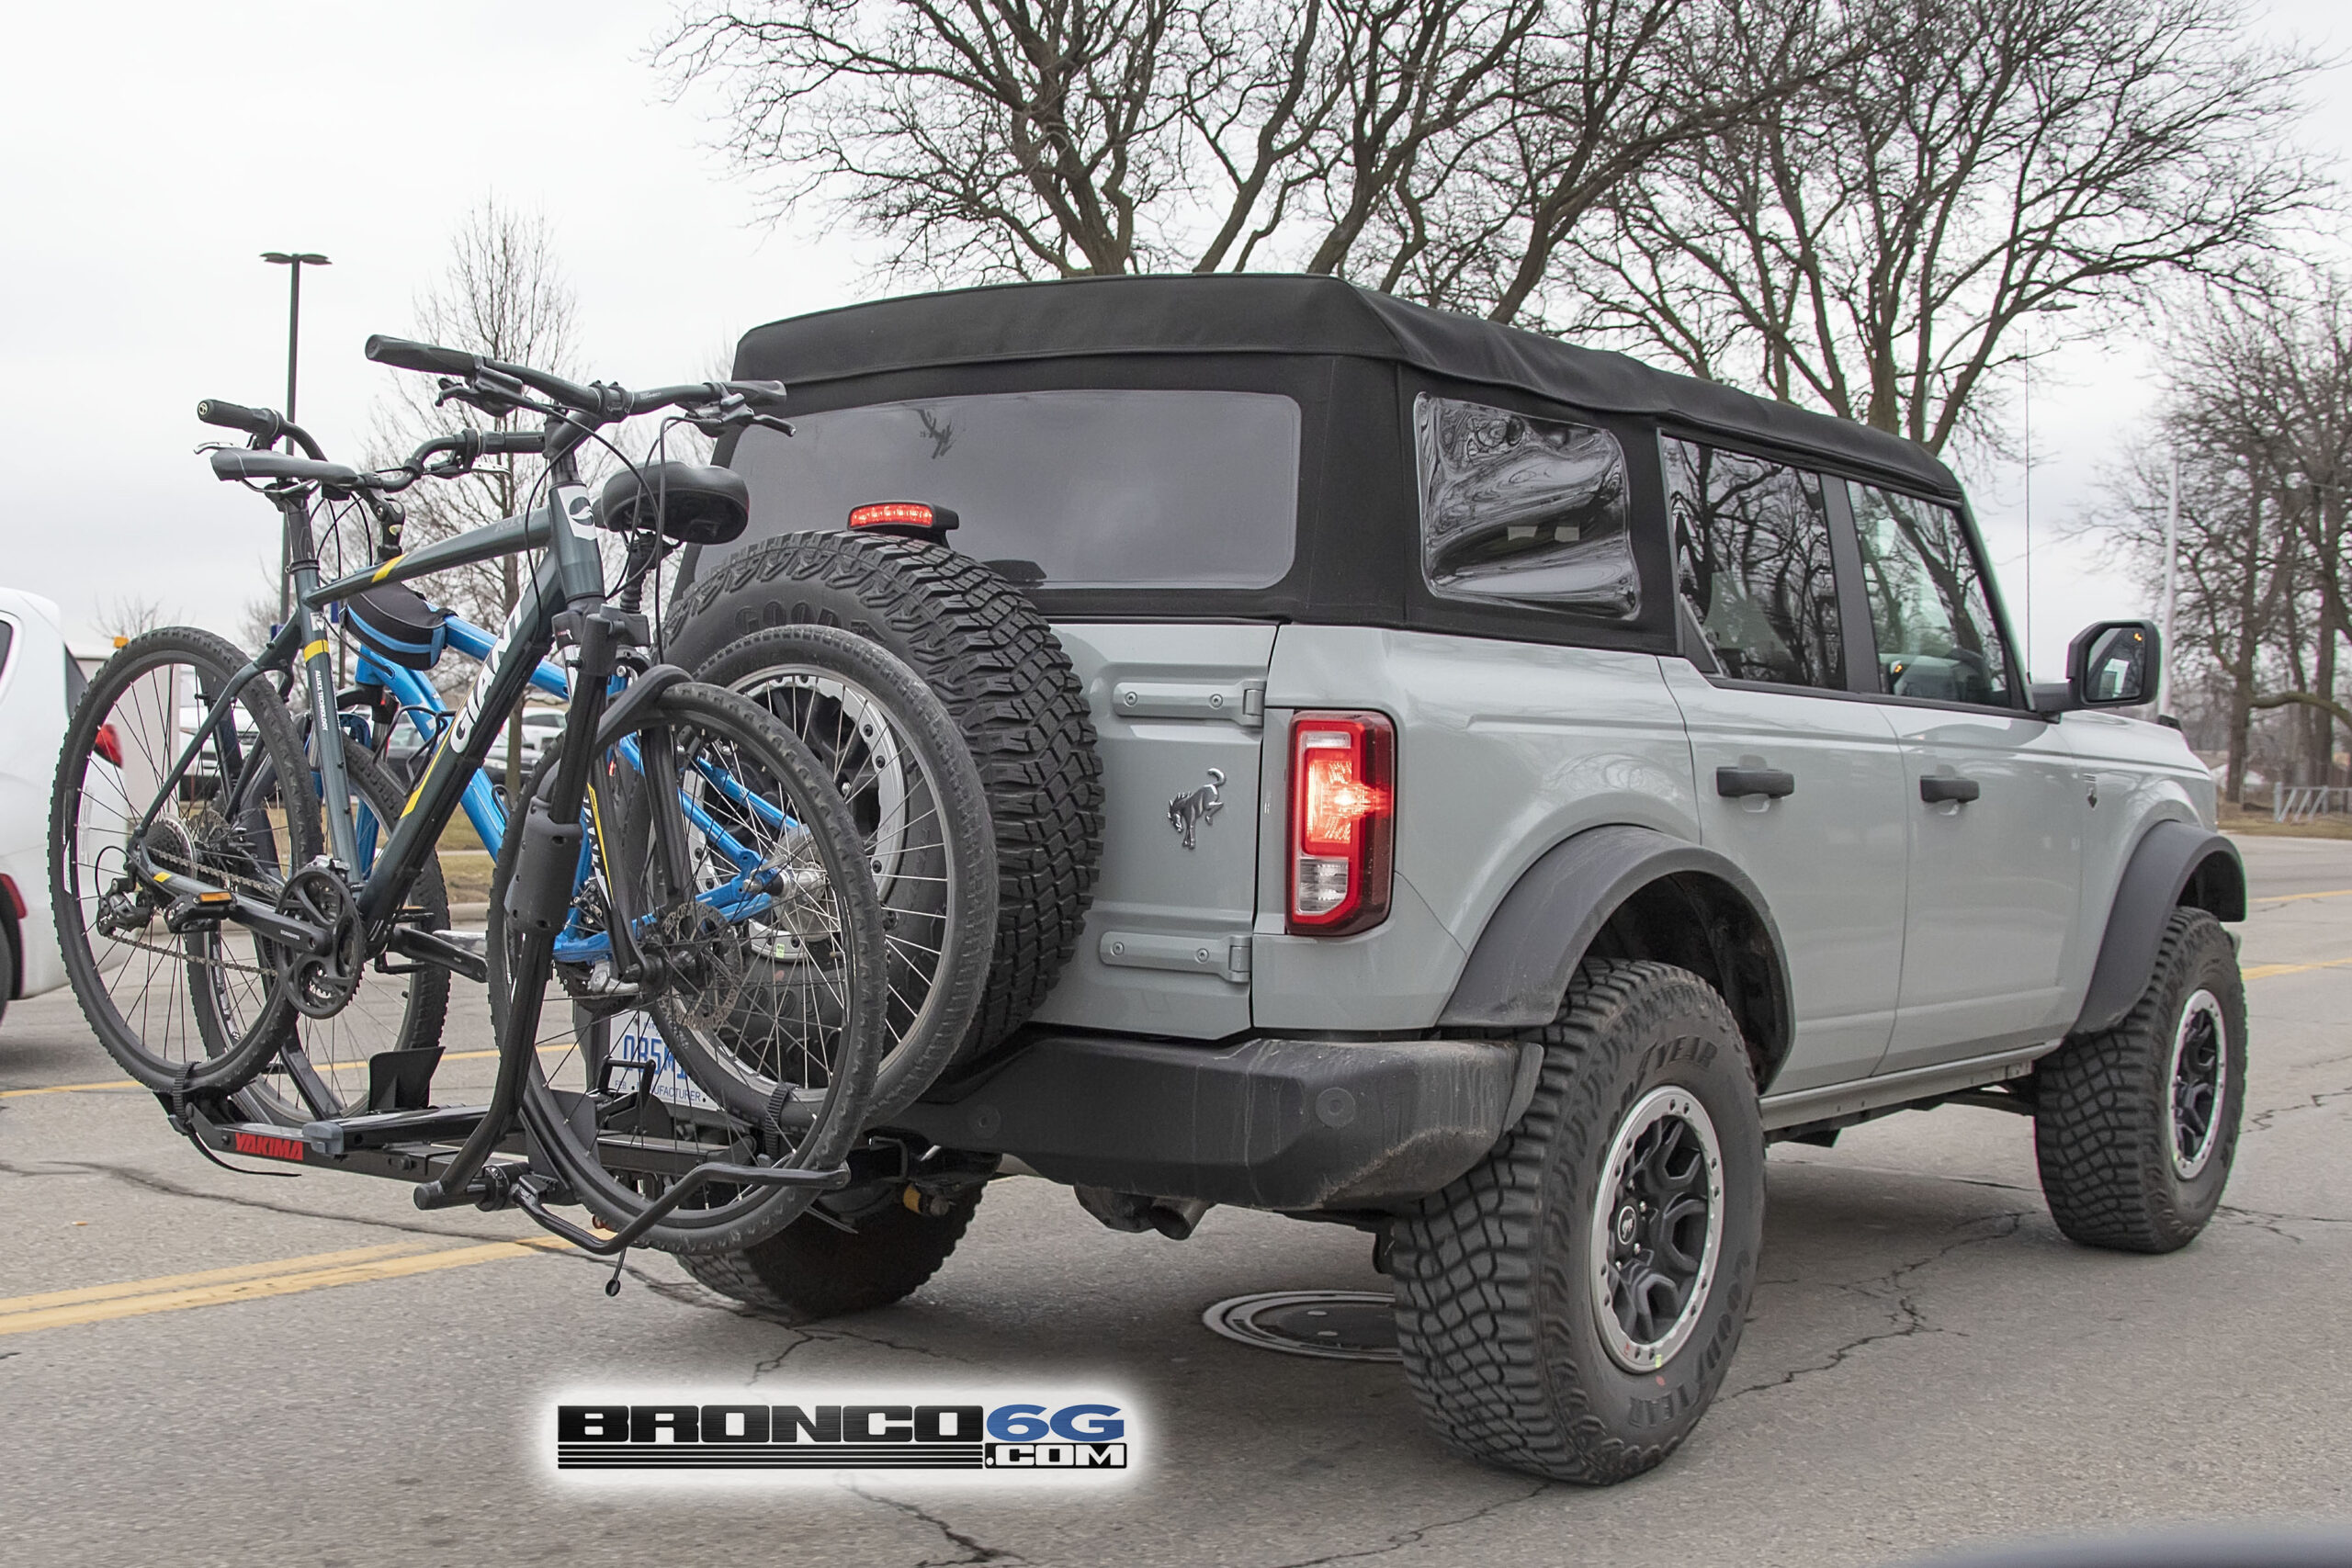 2021 Bronco spotted with hitch bike rack (Yakima) Bronco6G 2021